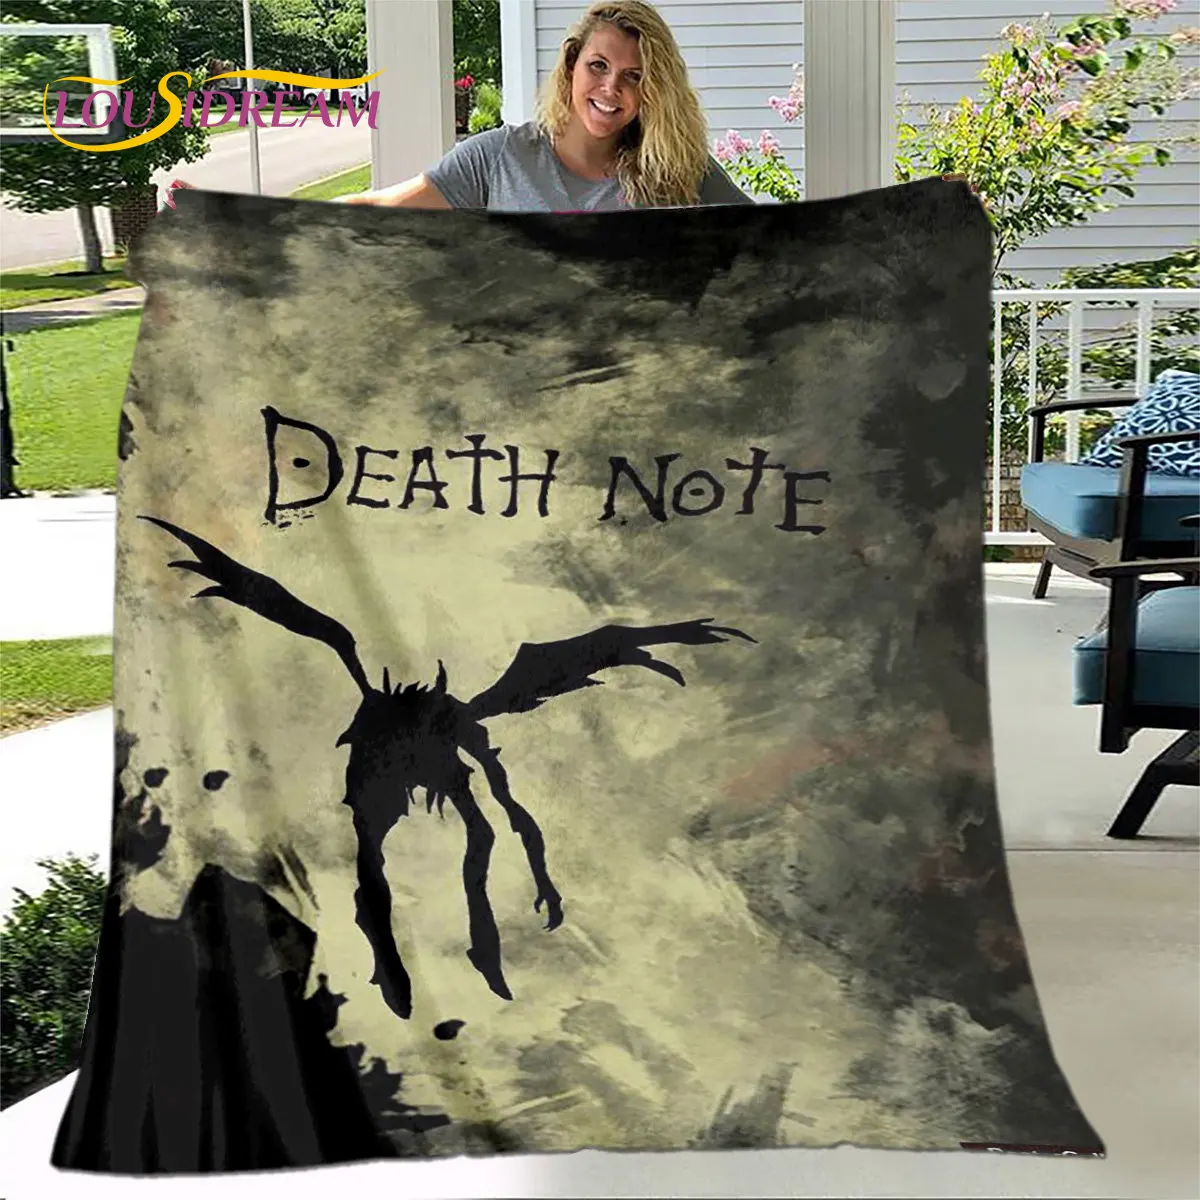 

Anime Death Note Horror Cartoon Blanket,Flannel Blanket Throw Blanket,Soft Warm Blanket for Living Room Bedroom Beds Sofa Gift